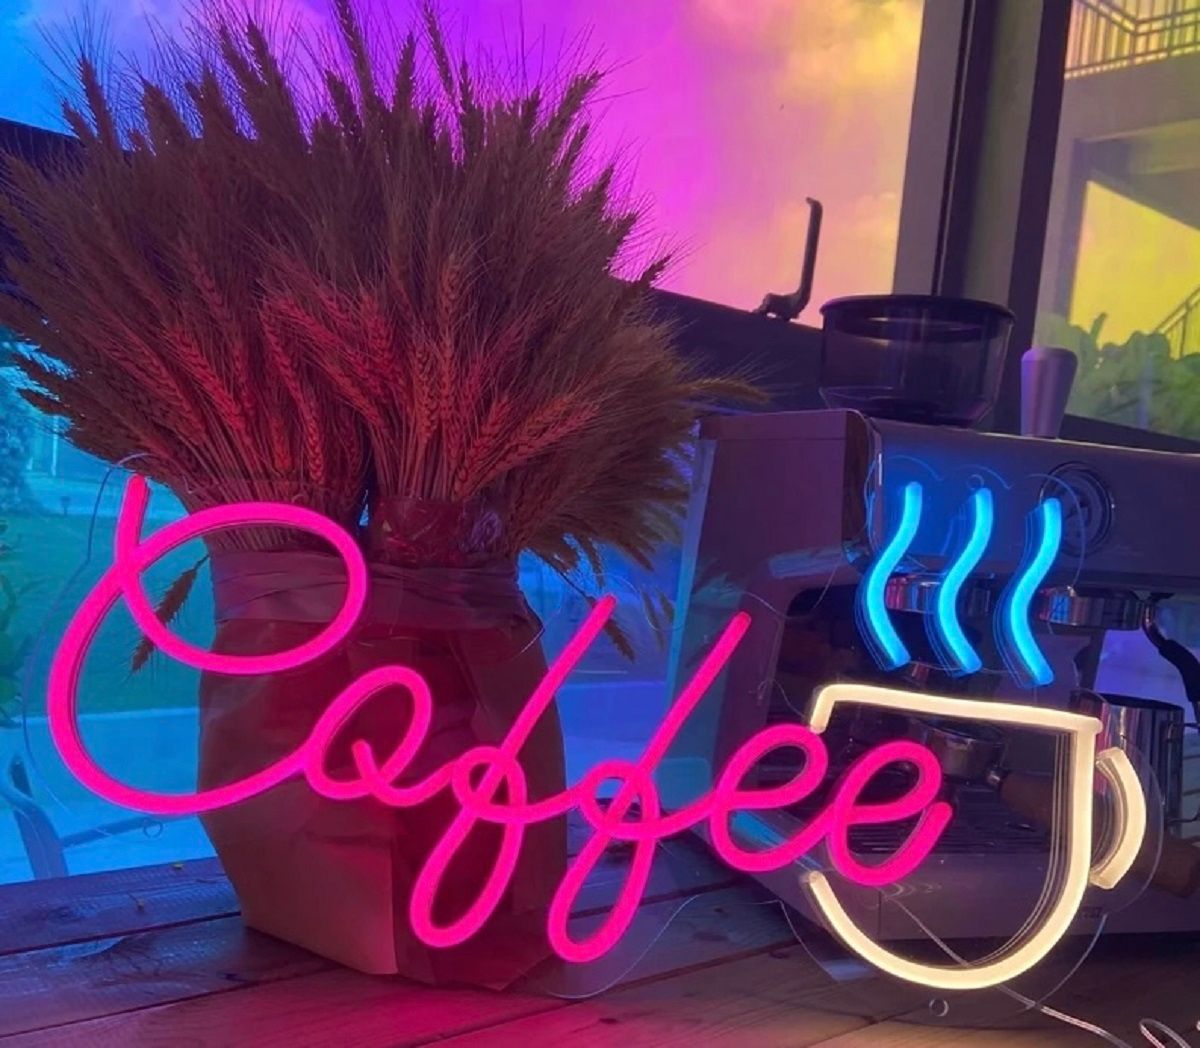 Coffee Bar Neon Sign